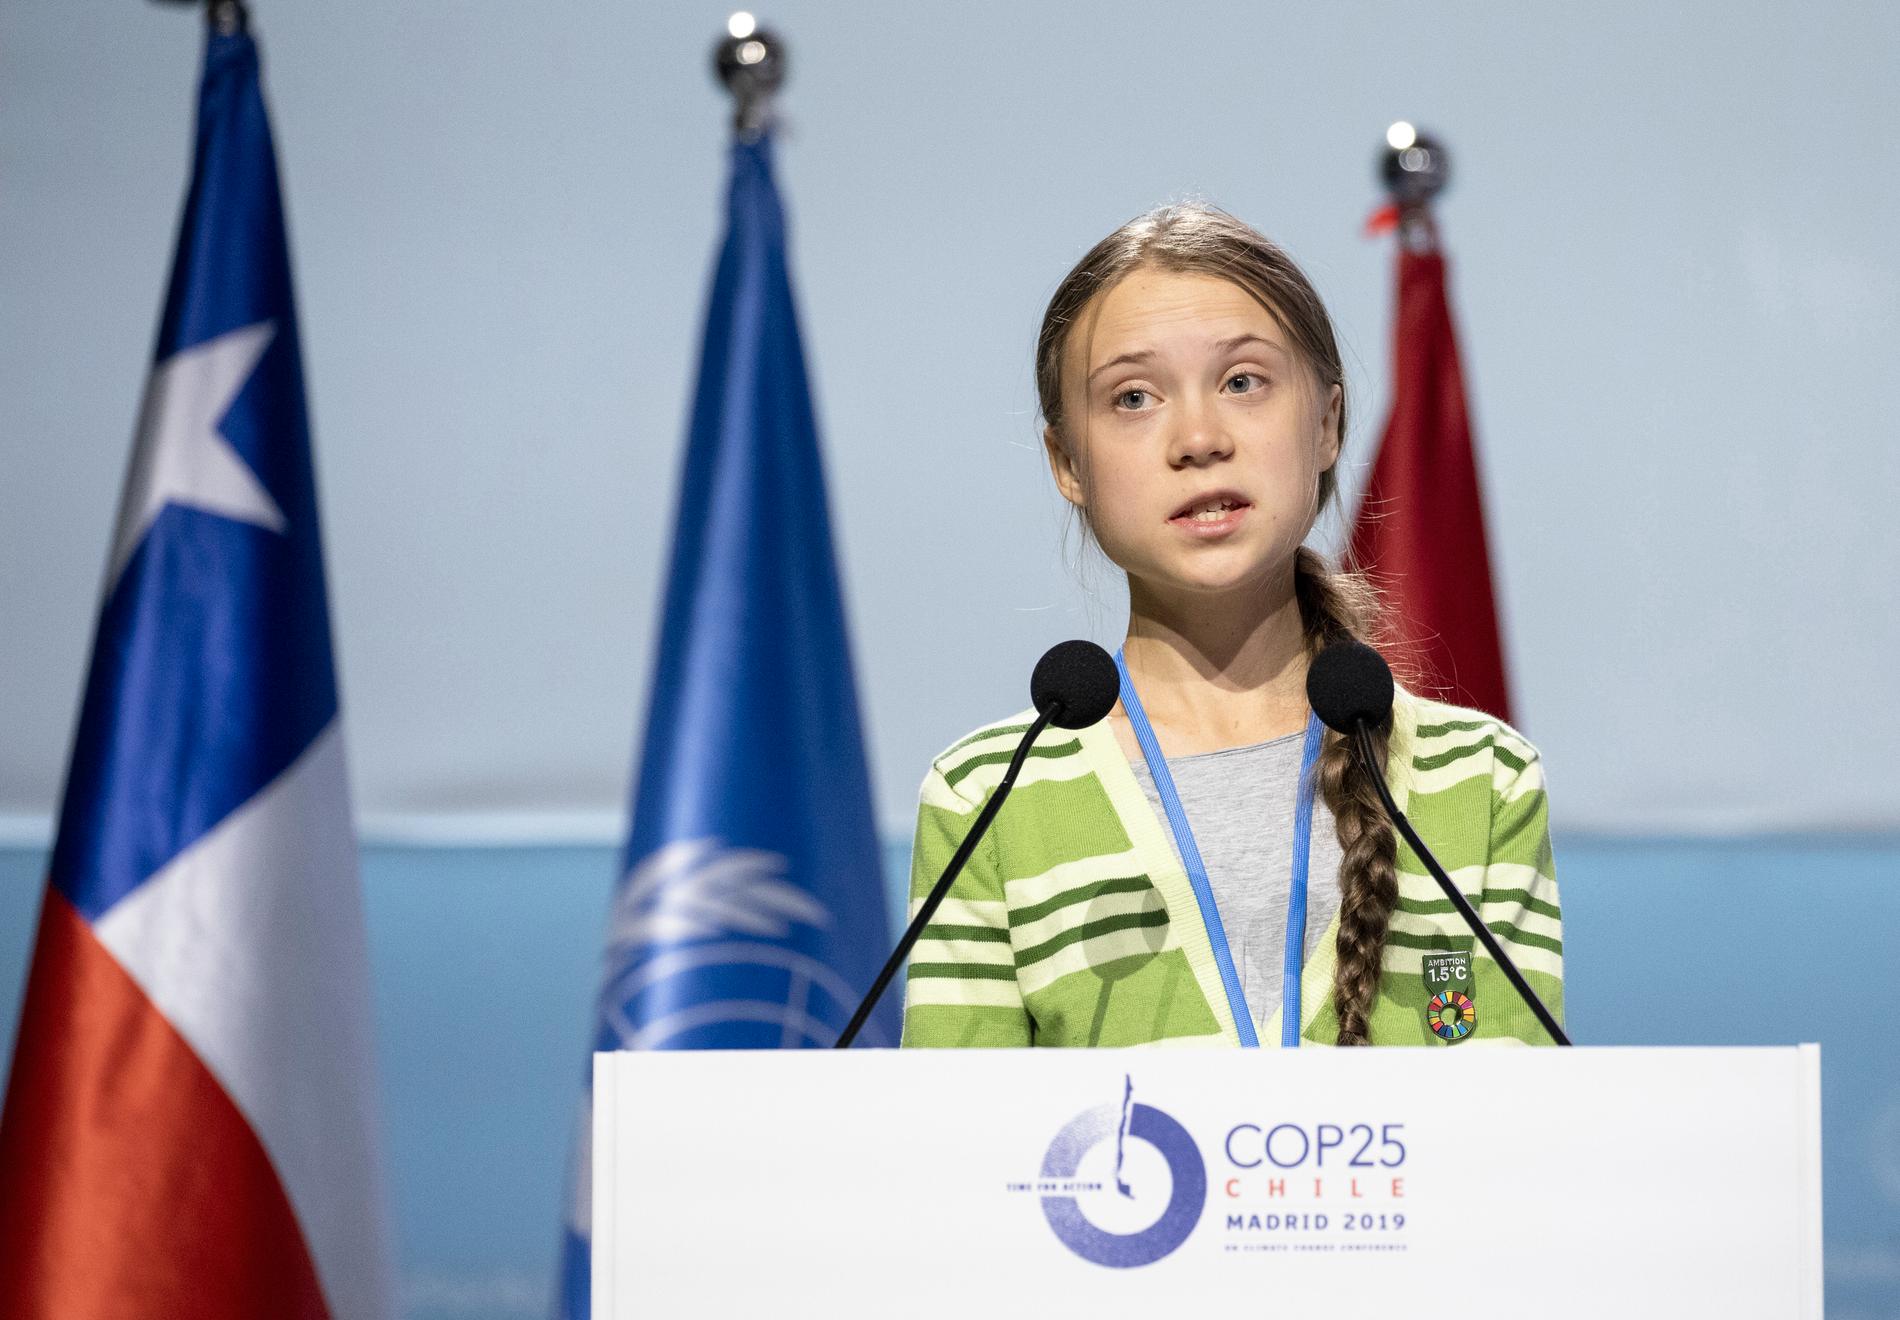 Klimataktivisten Greta Thunberg talat på klimatkonferensen i Madrid.